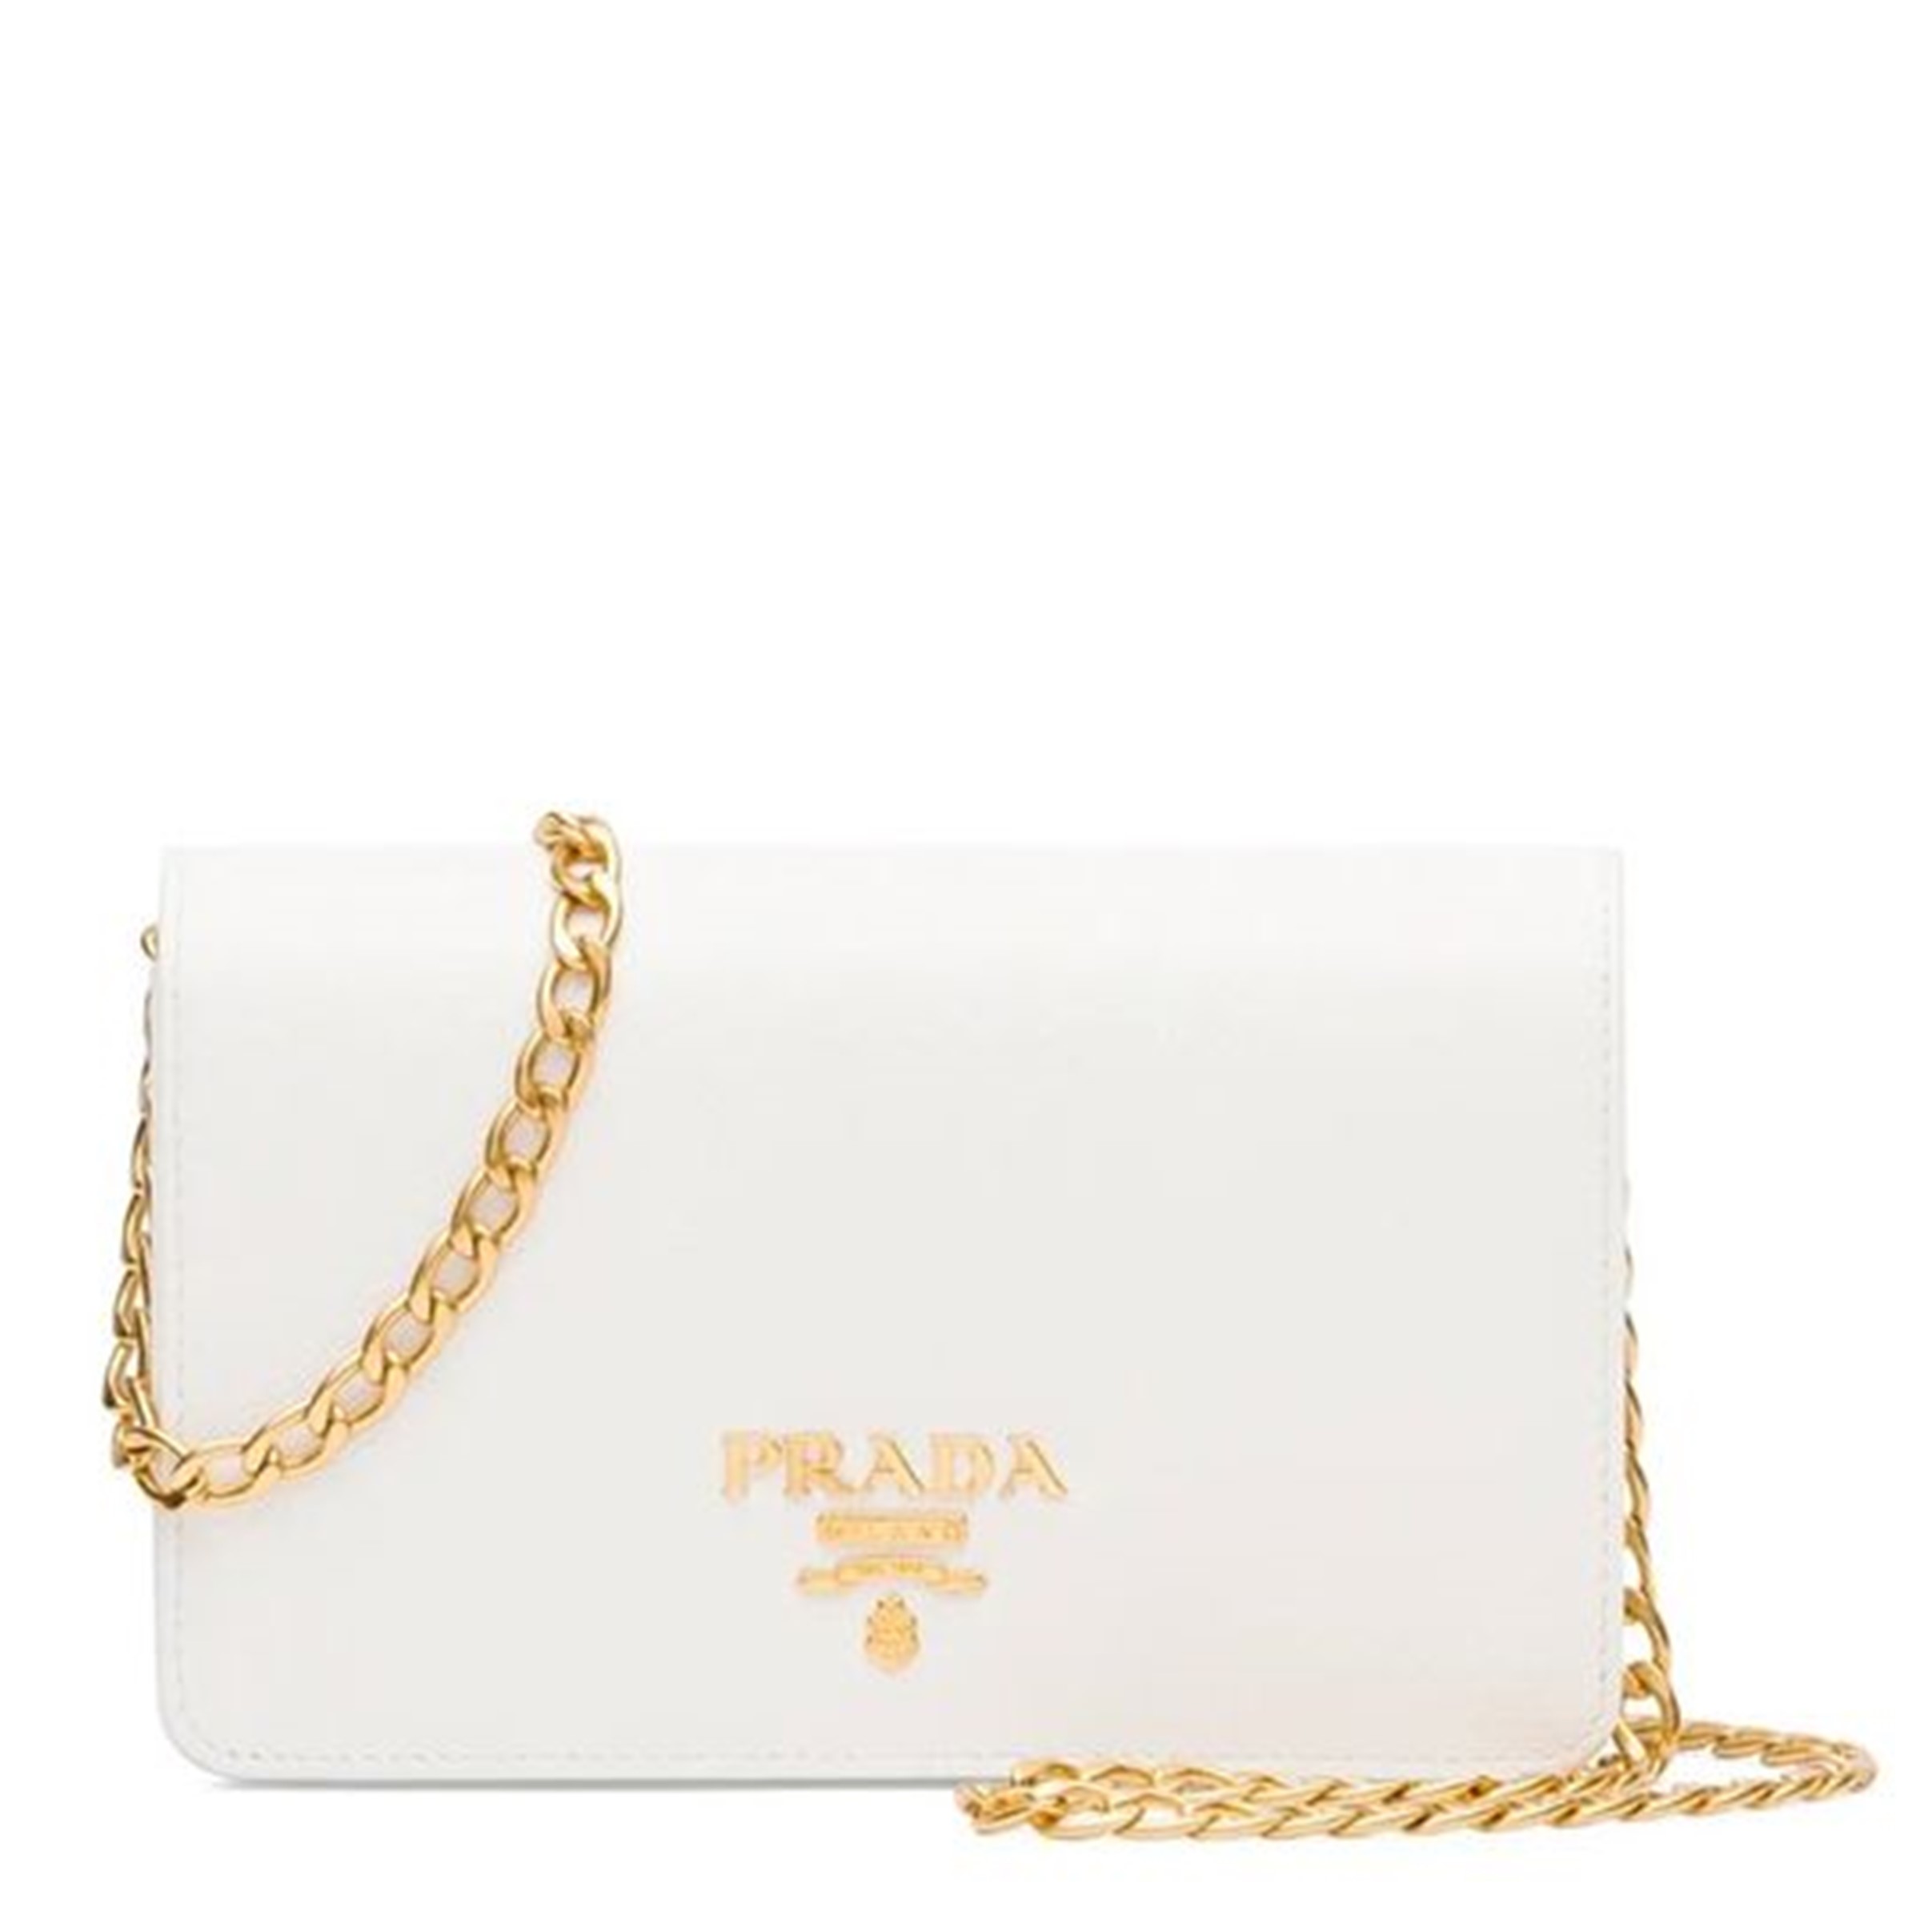 PRADA Lux Wallet Chain Bag - White/Gold - Adorn Collection